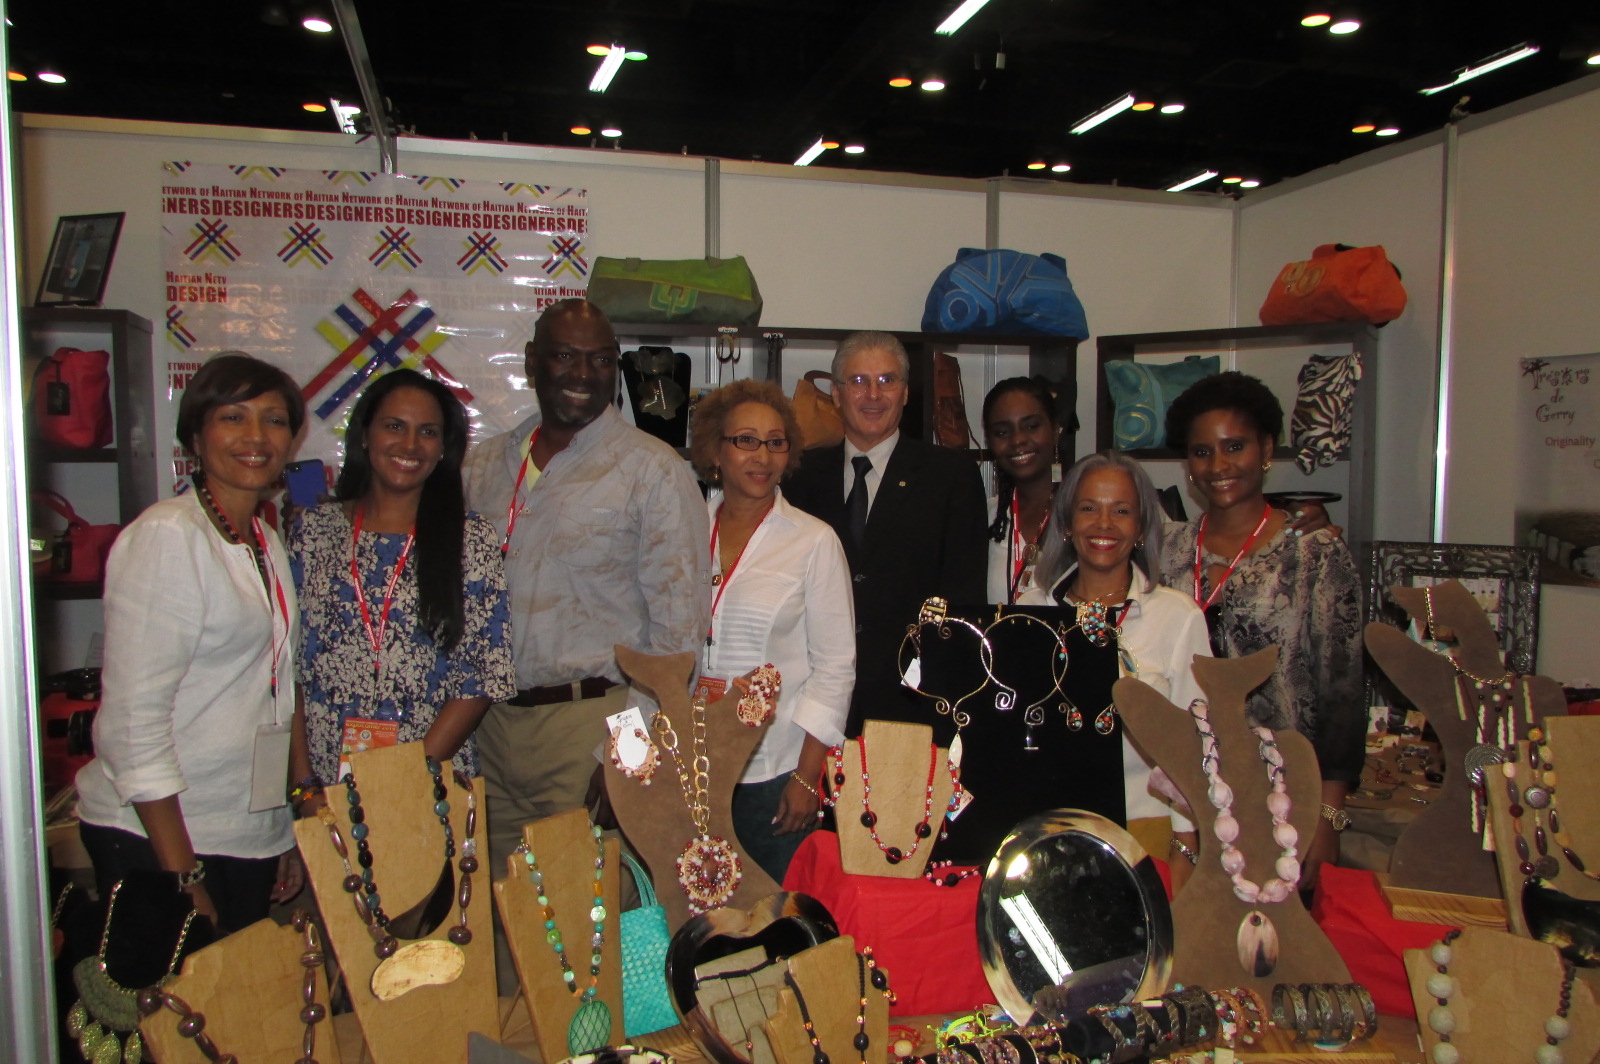 Haití participa por primera vez en Expocomer 2014